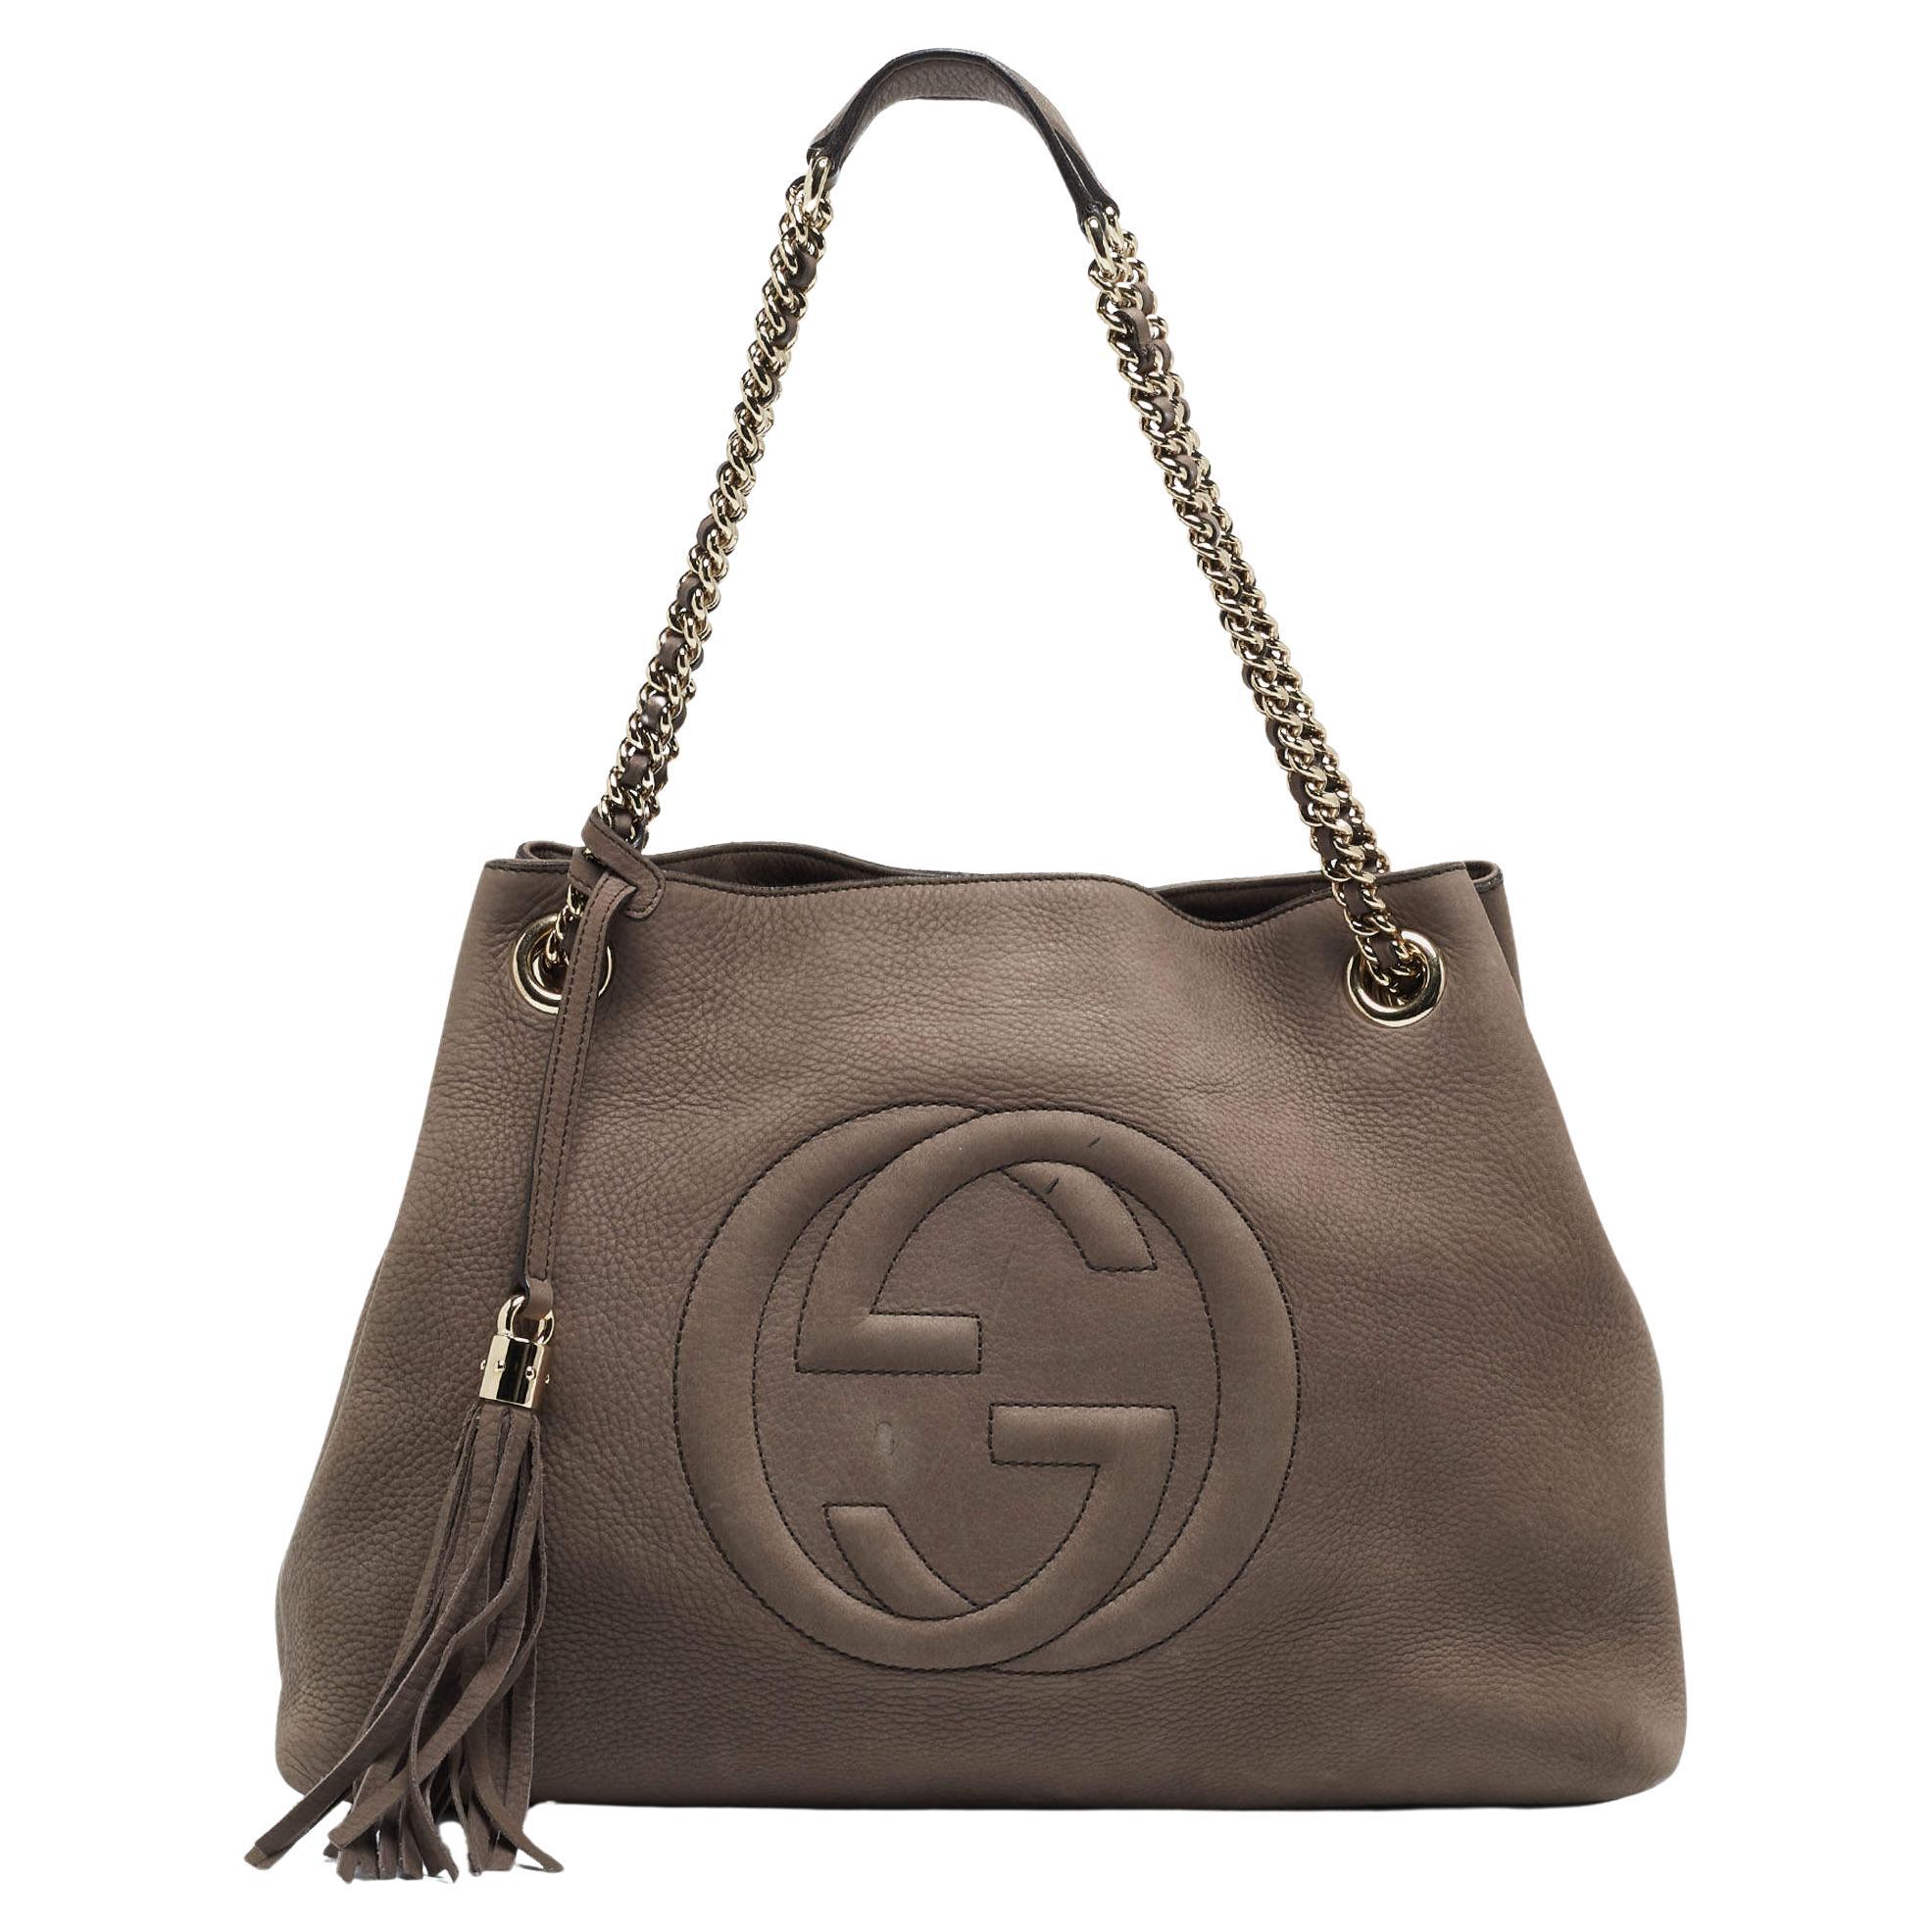 Gucci Brown Nubuck Leather Medium Soho Chain Shoulder Bag